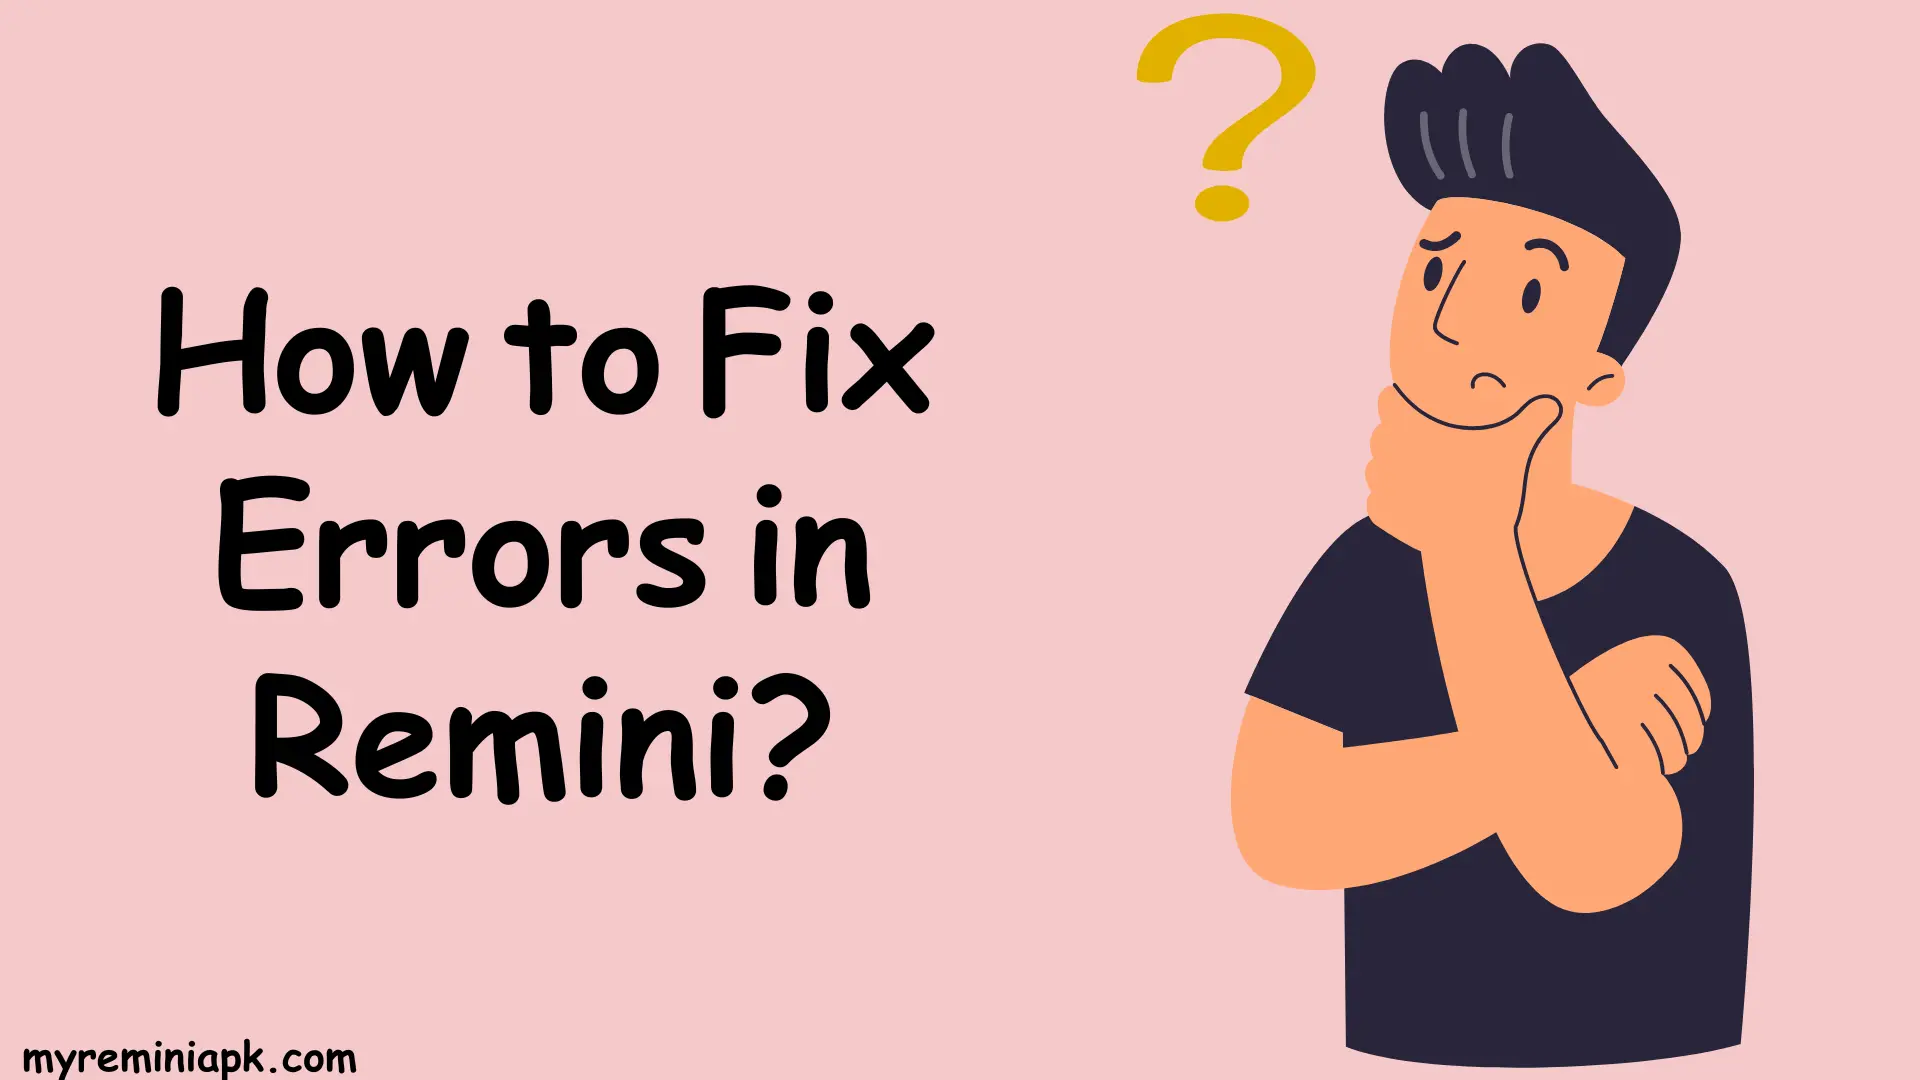 How to Fix Errors in Remini